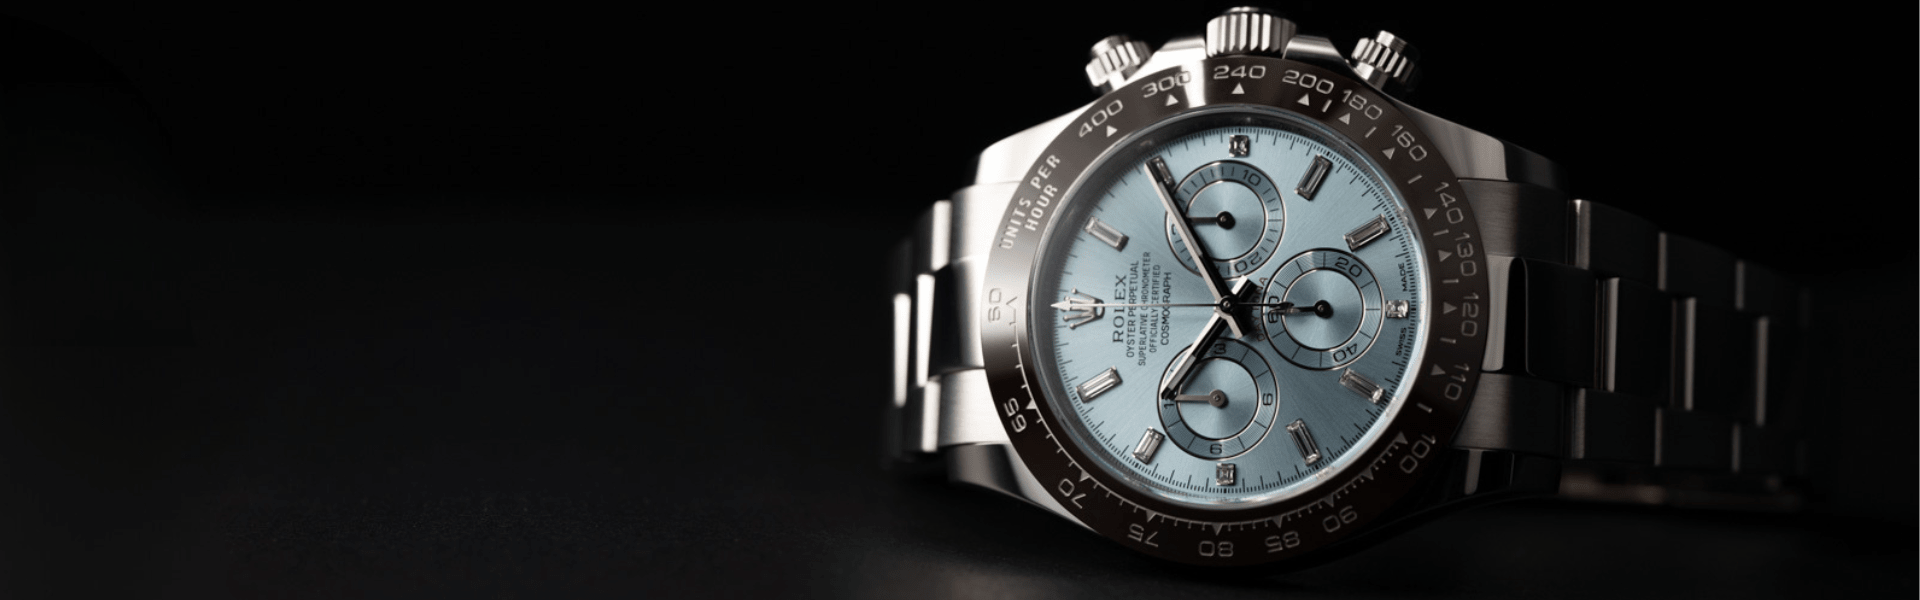 Anant Ambani's Patek Philippe luxury watch costs over INR 18 crores